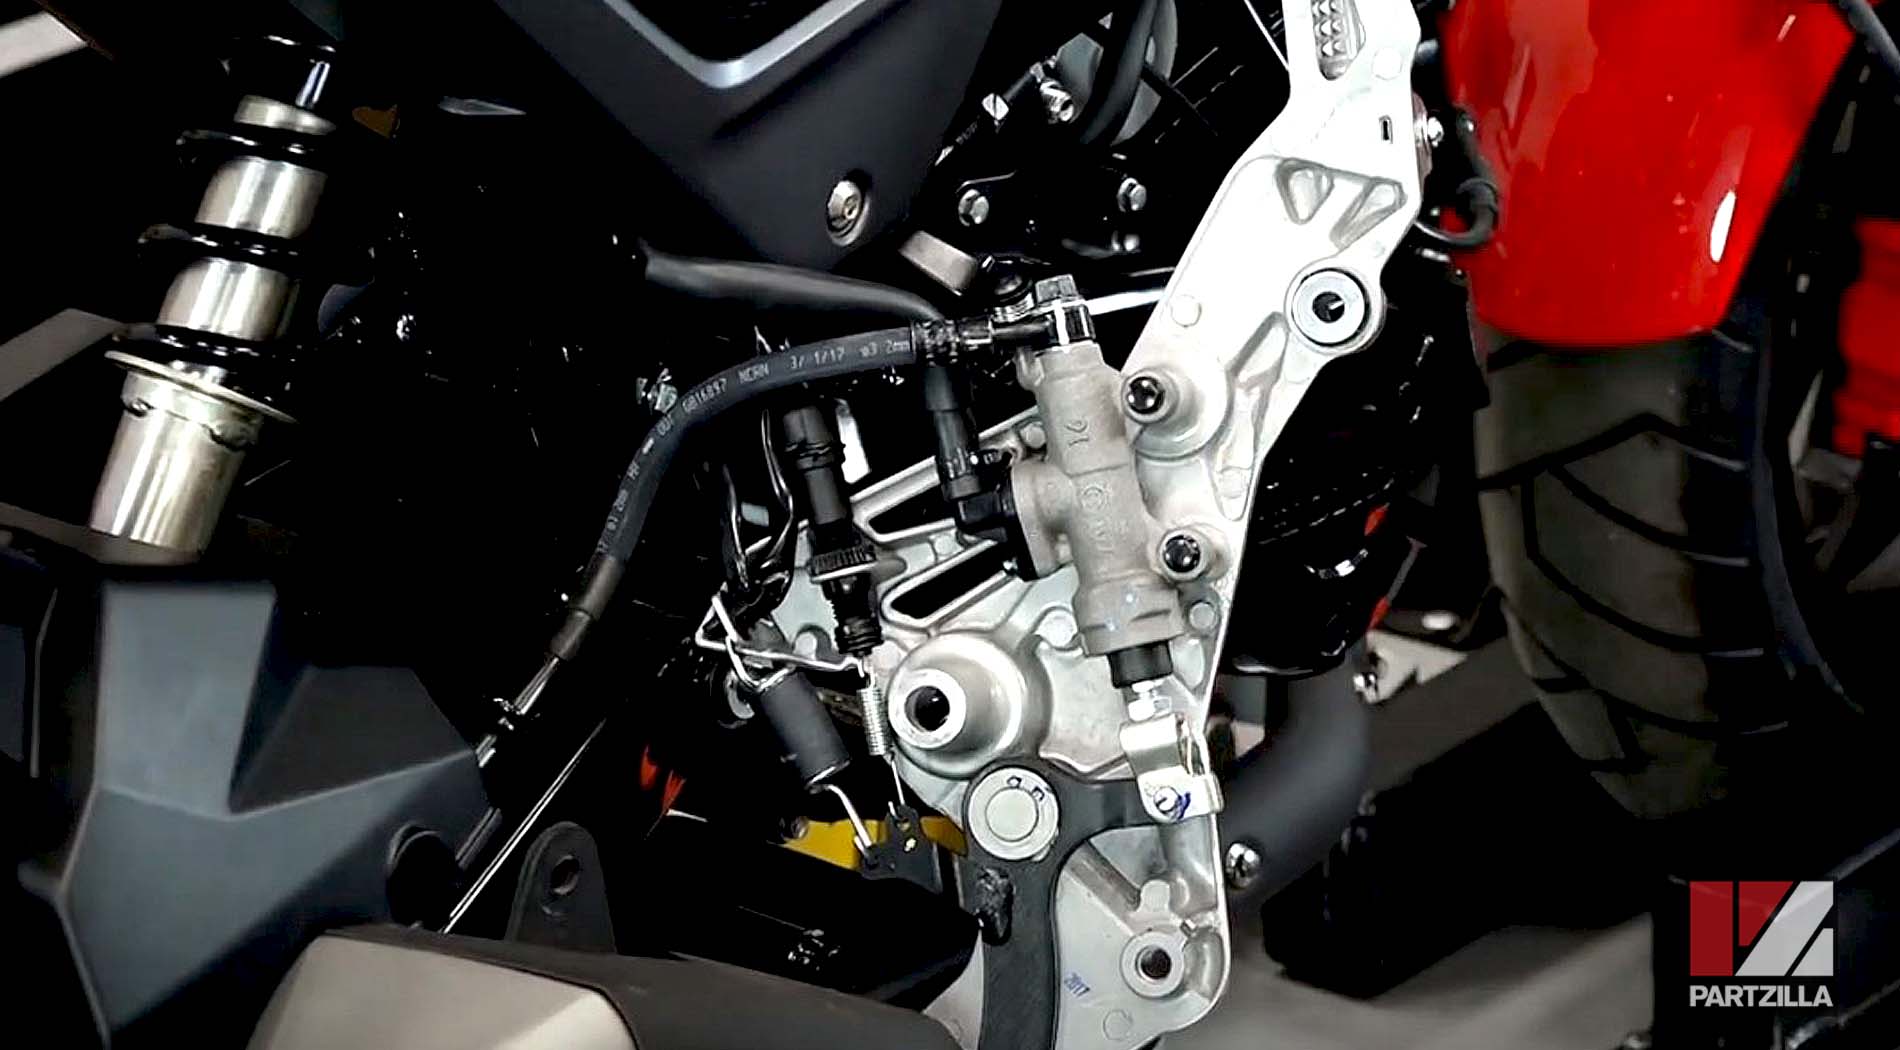 Honda Grom 125 rearset upgrade gearshift removal